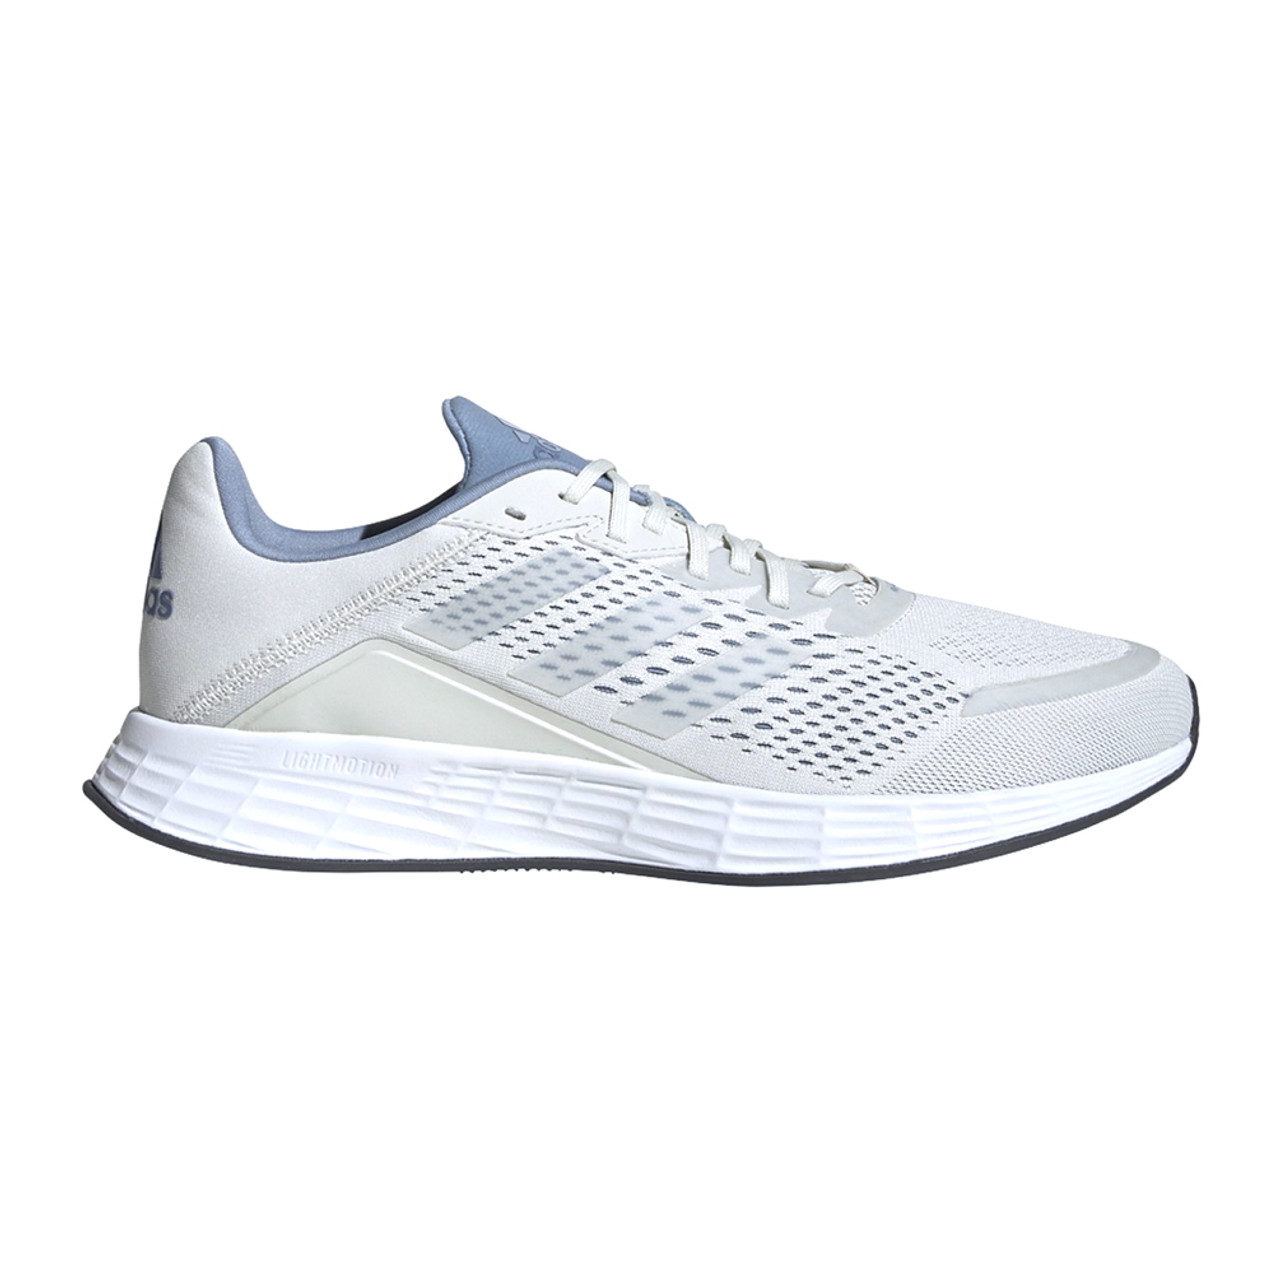 Adidas Men's Duramo SL Running Shoe - Grey | Discount Adidas Men's Athletic  Shoes & More - Shoolu.com | Shoolu.com